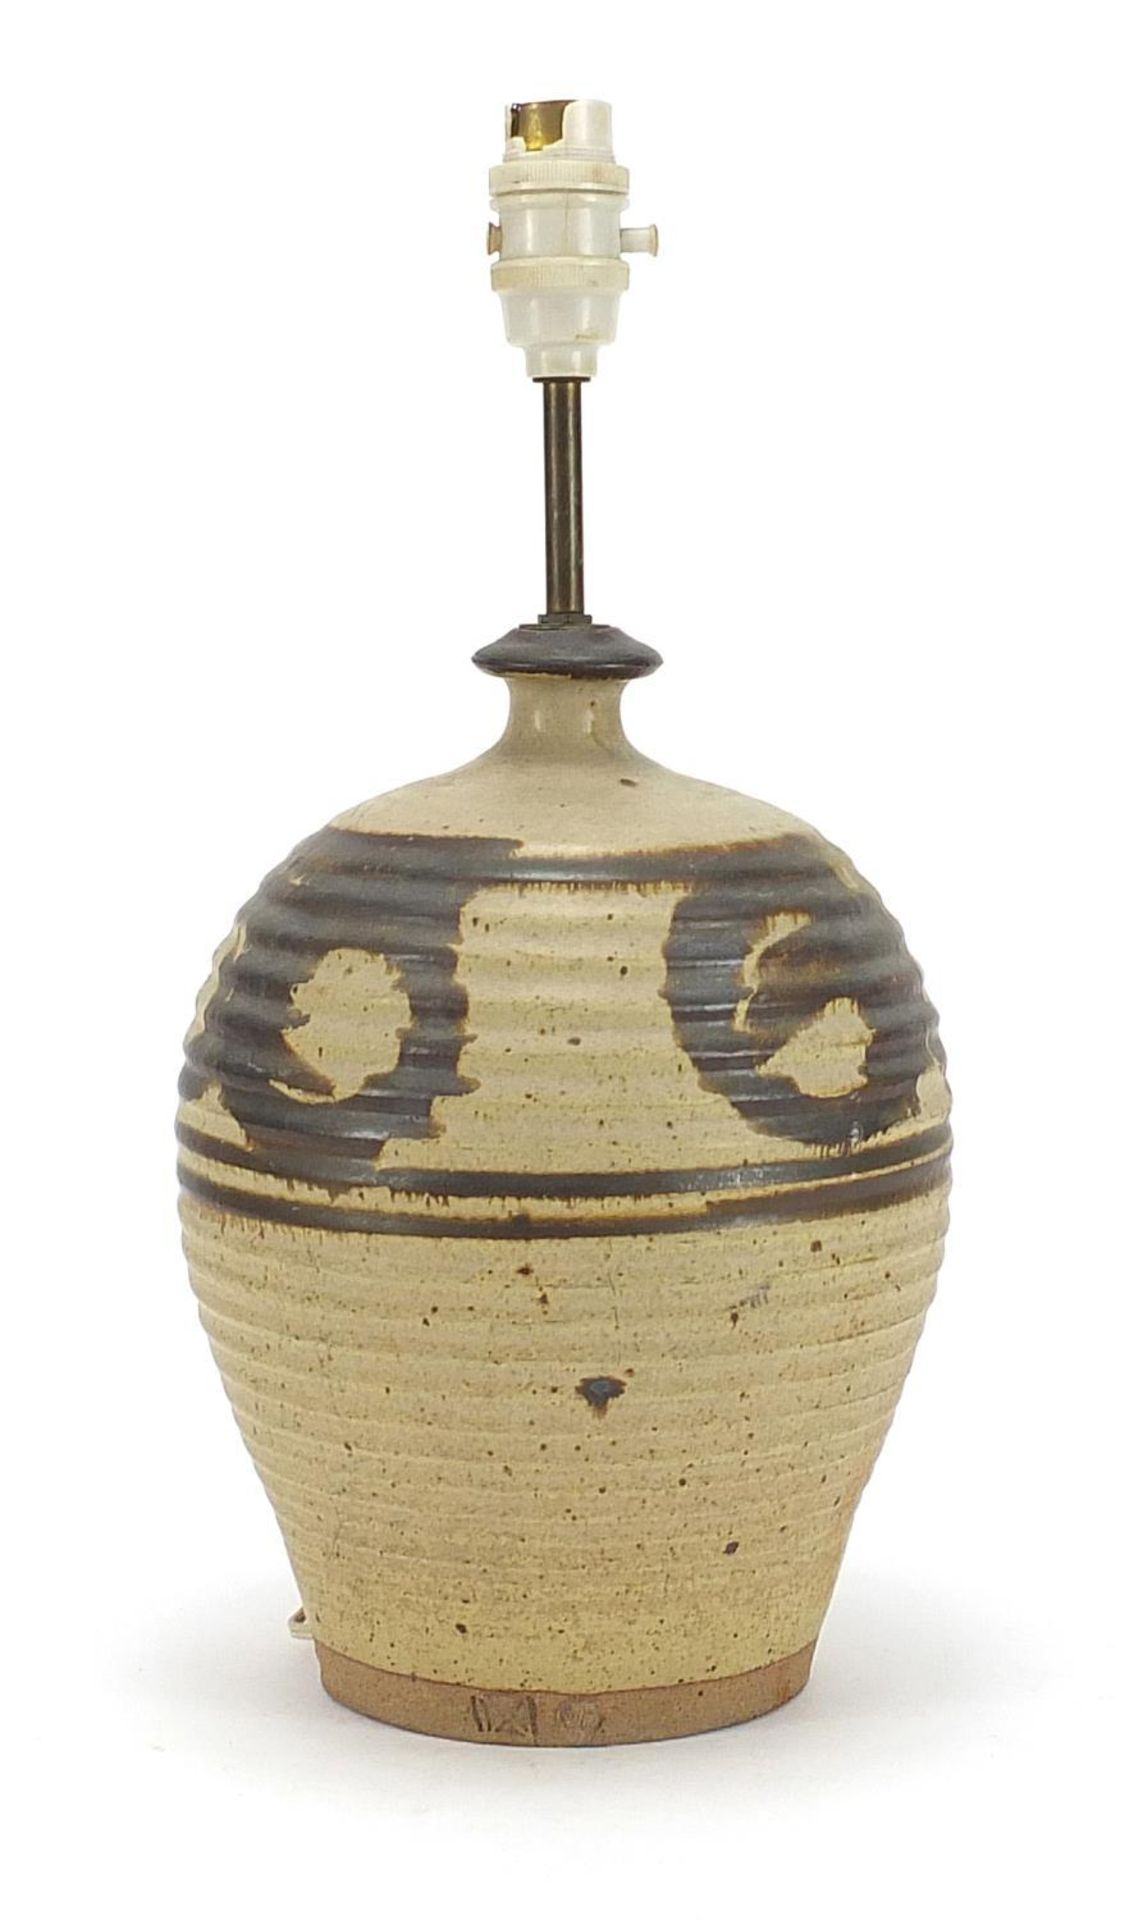 Studio pottery table lamp, impressed initials around the footrim, 39cm high :